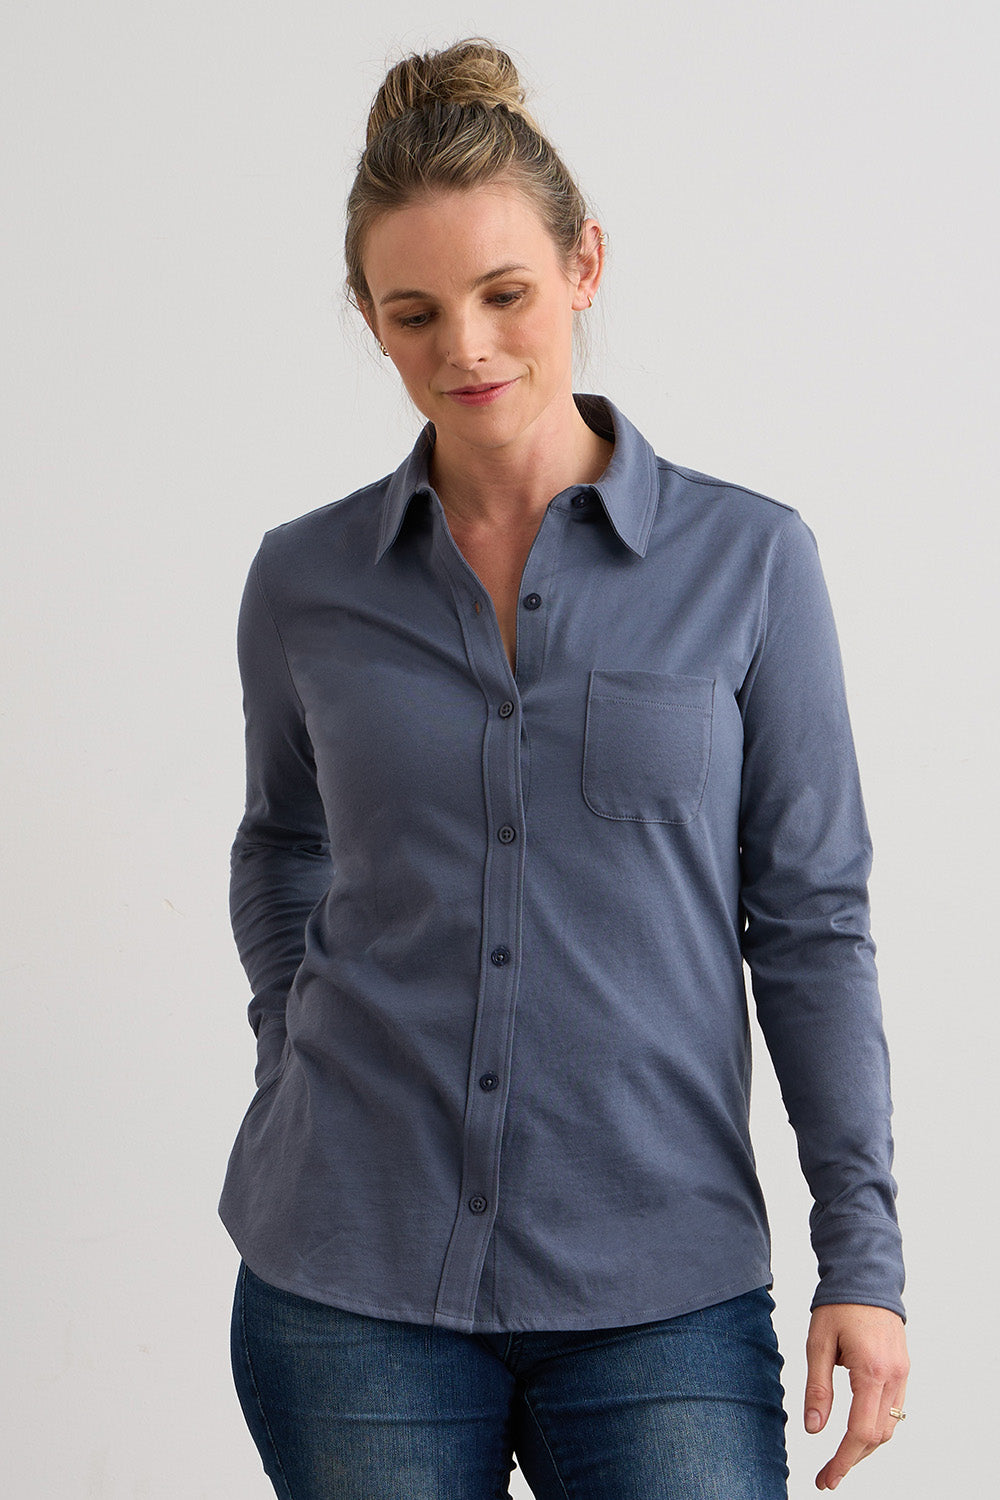 Women\'s 100% Cotton Knit Button Down Shirt | Fair Indigo